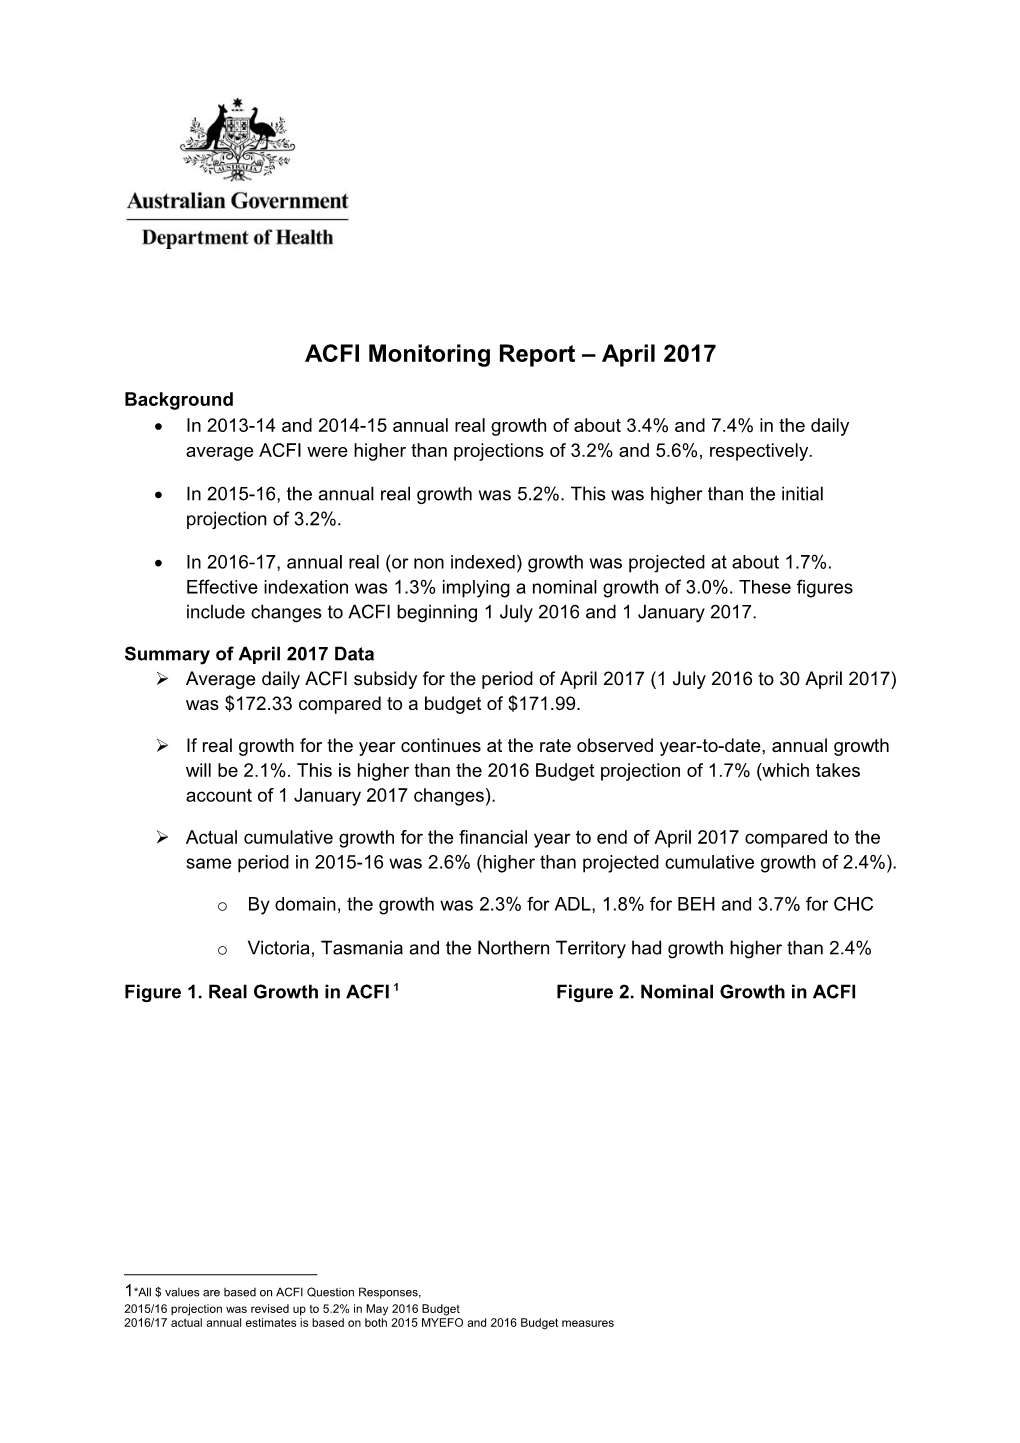 ACFI Monitoring Report Mar